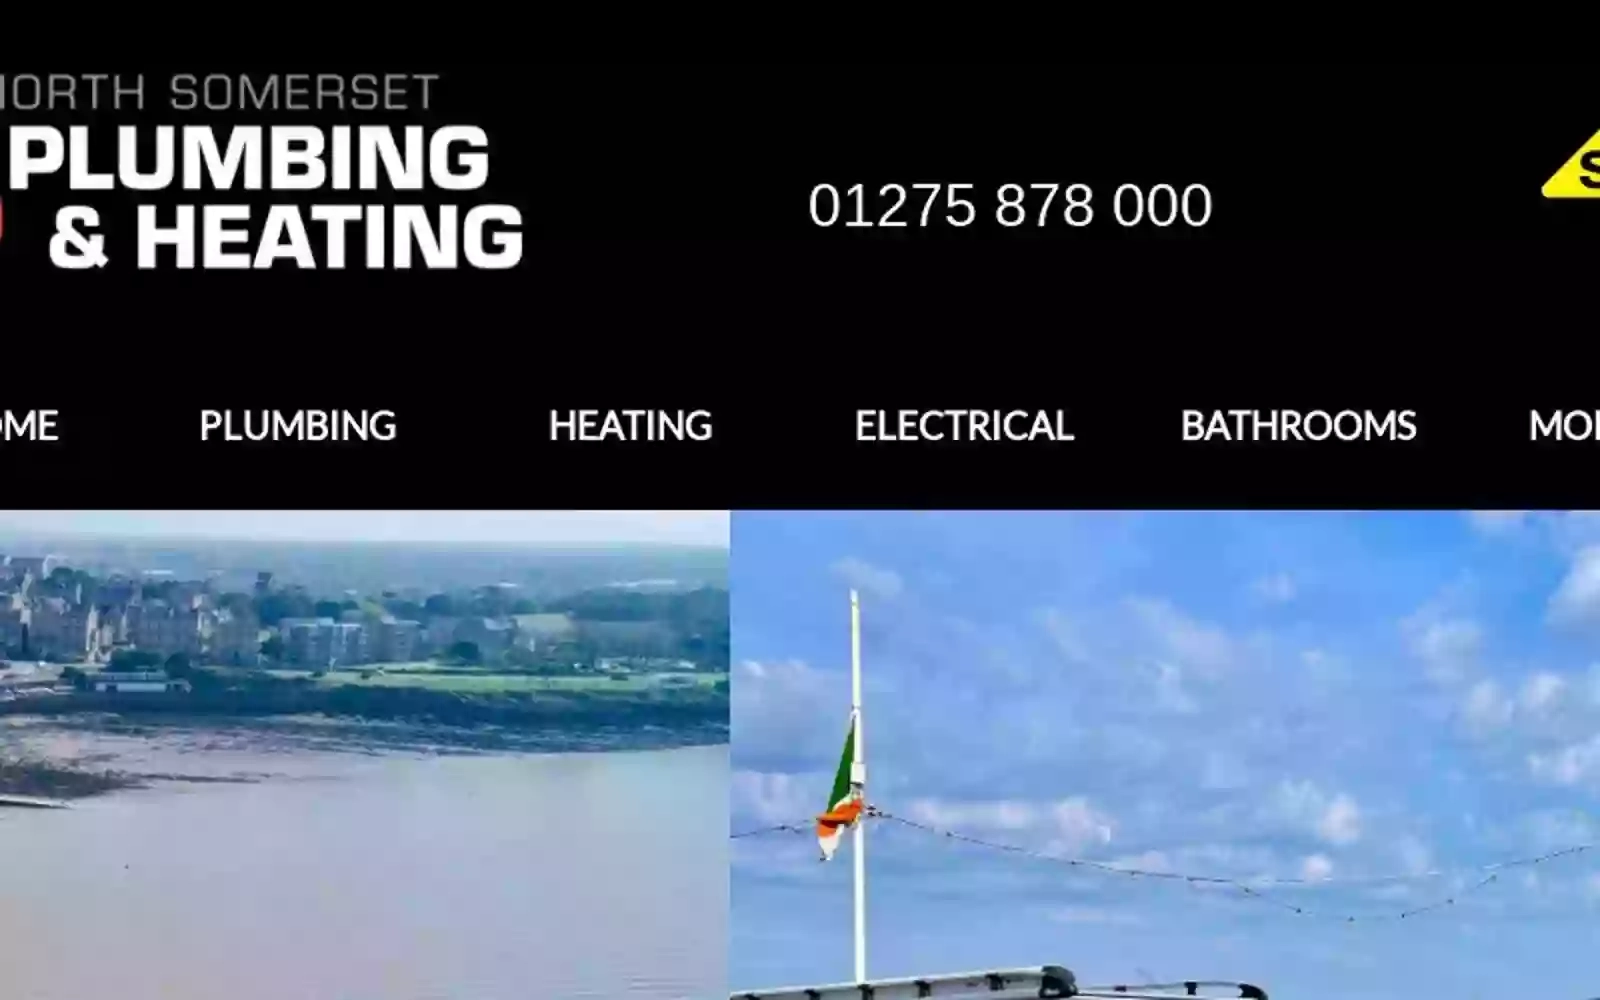 North Somerset Plumbing & Heating Ltd